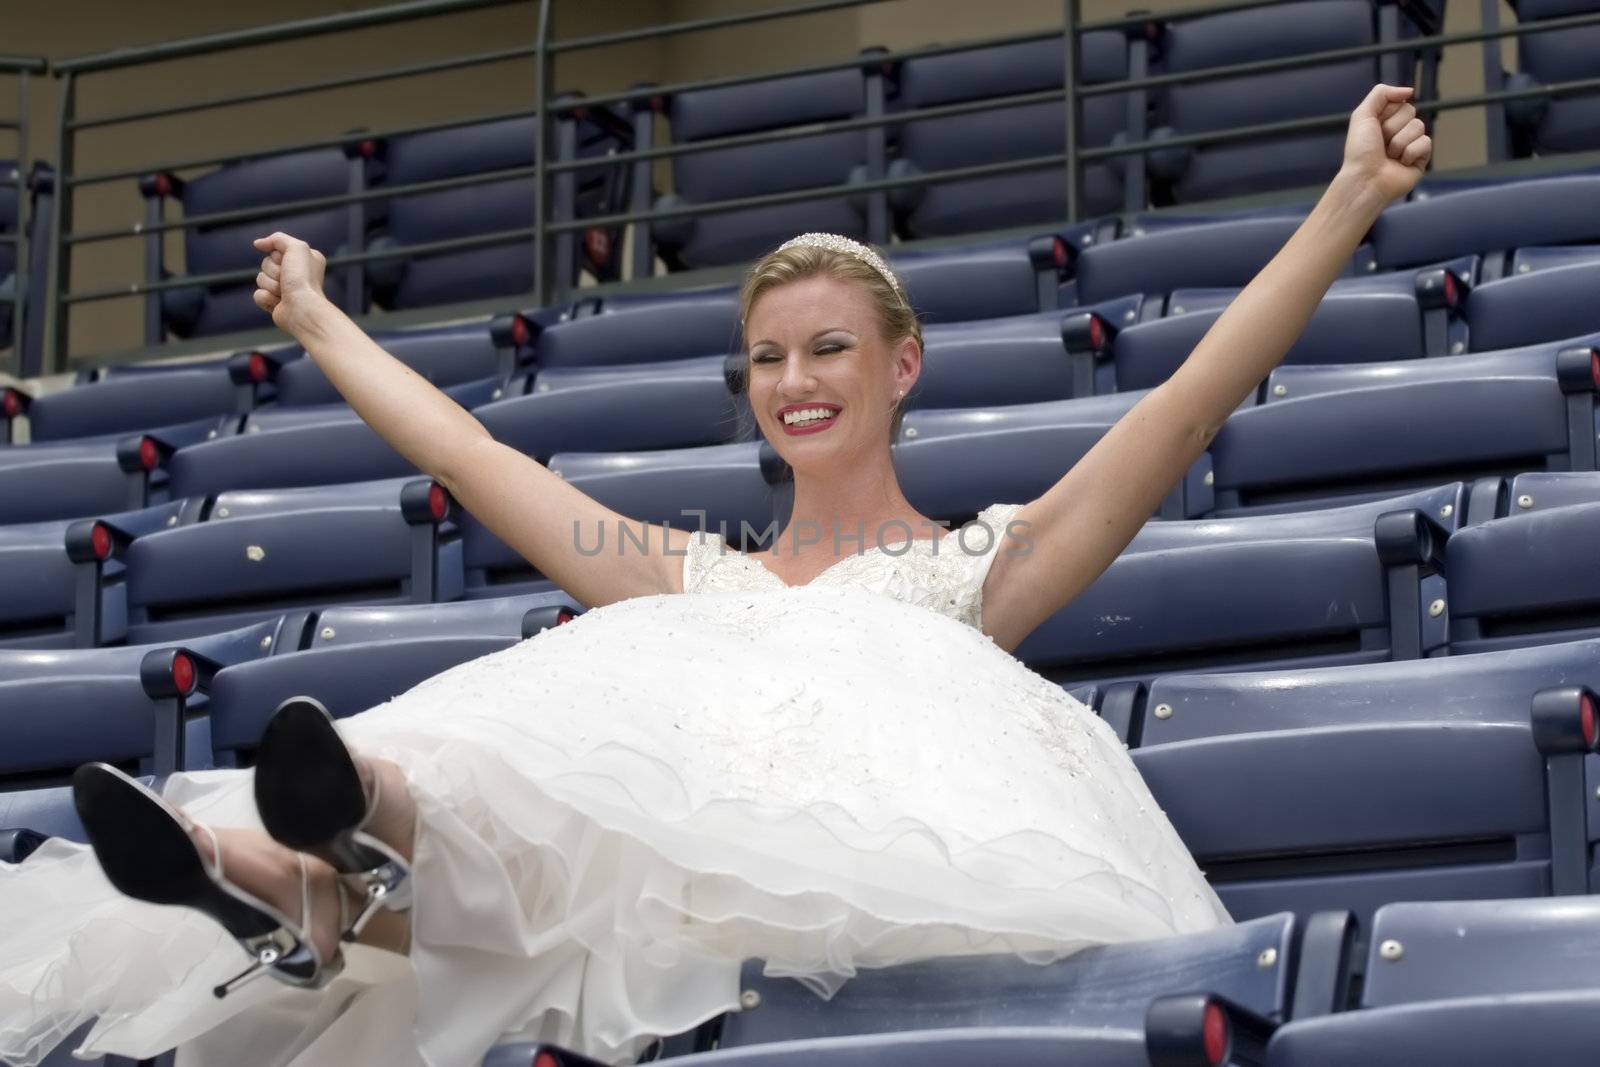 Model wearing wedding gown cheering in a baseball stadium.